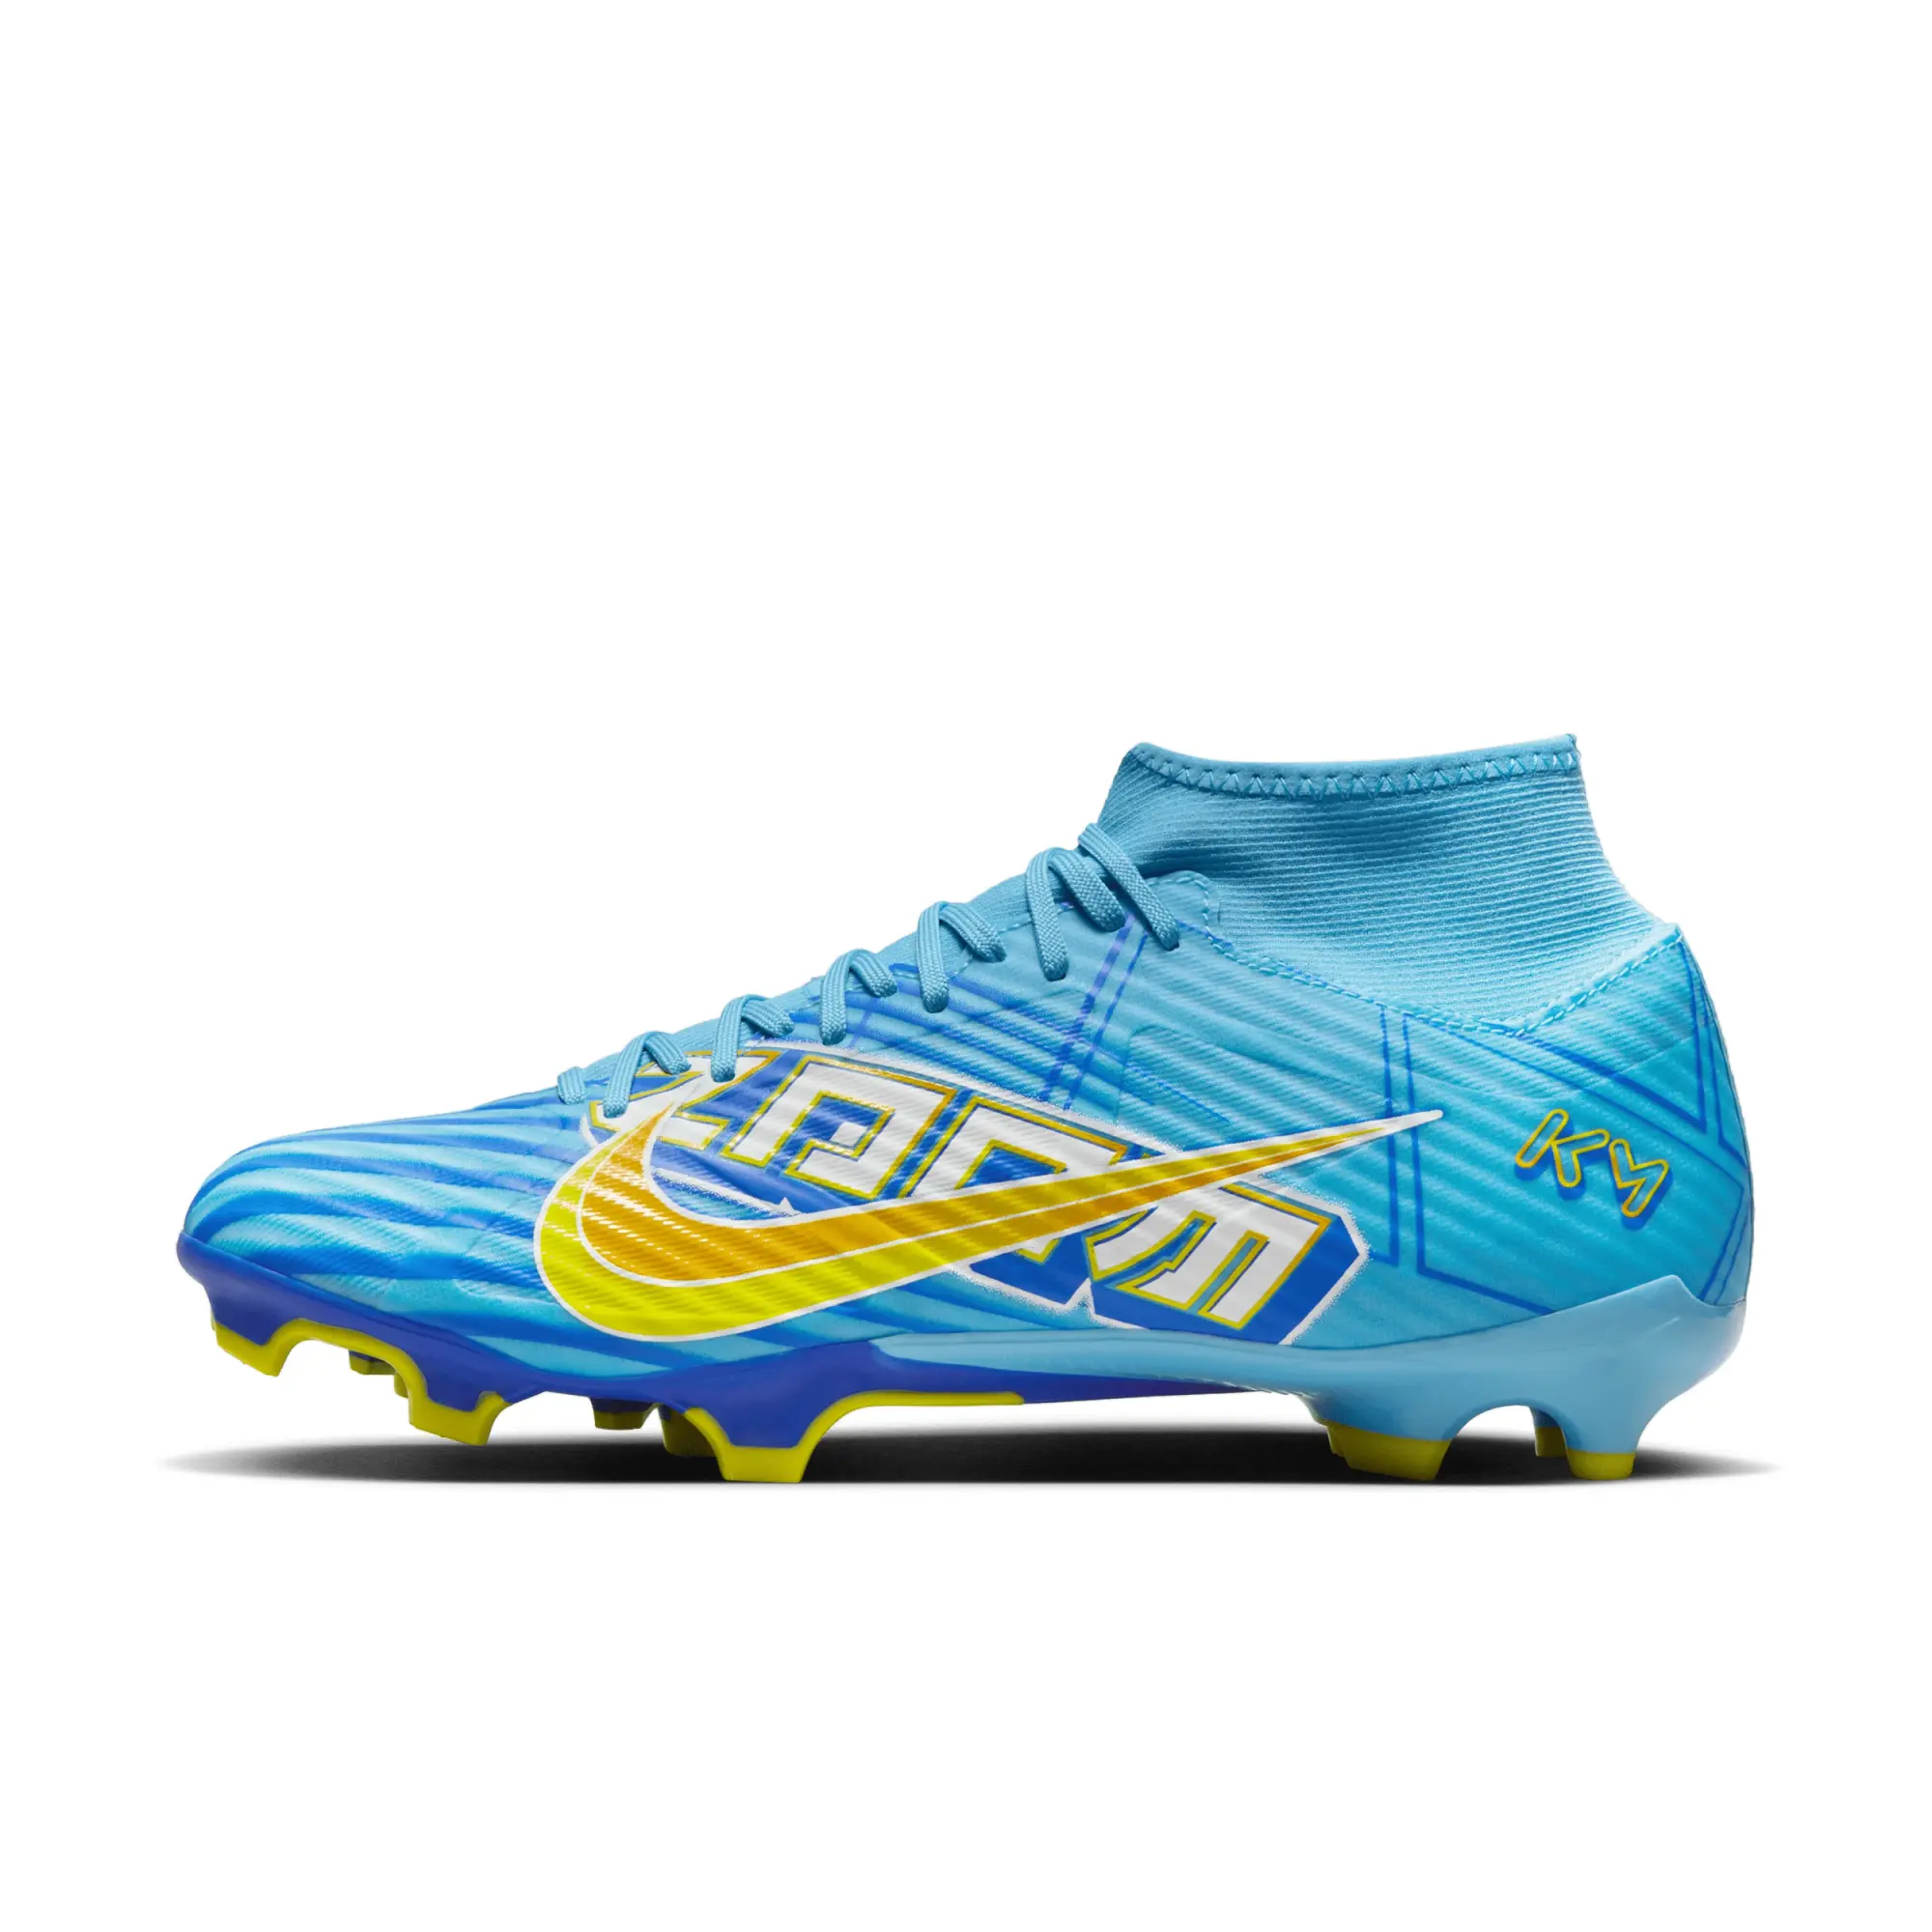 Nike Mercurial Superfly Academy DF FG Football Boots - Blue